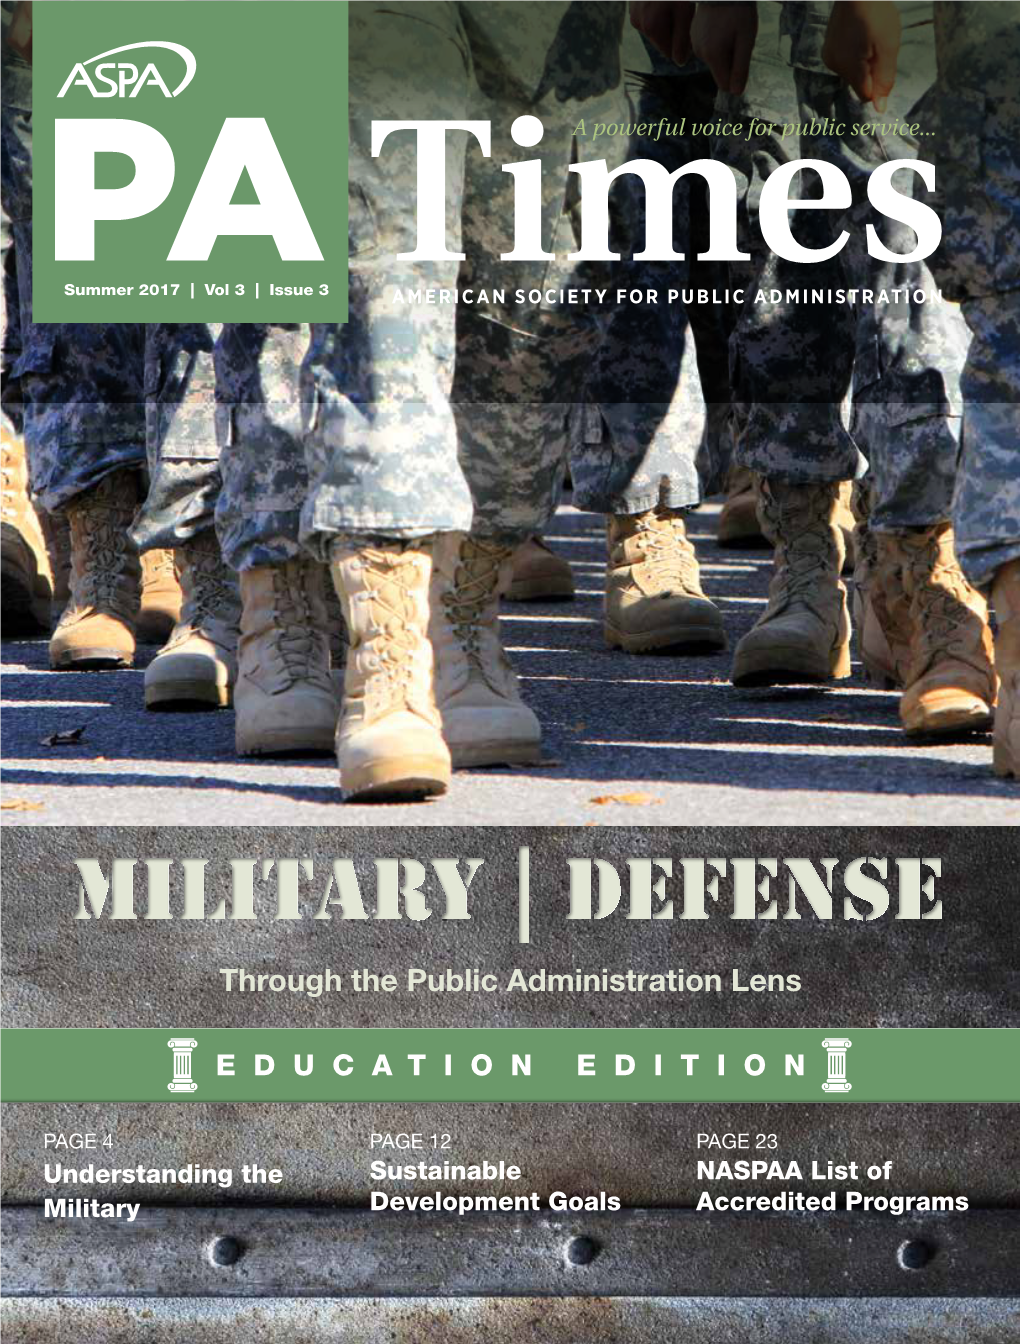 Military | Defense Through the Public Administration Lens